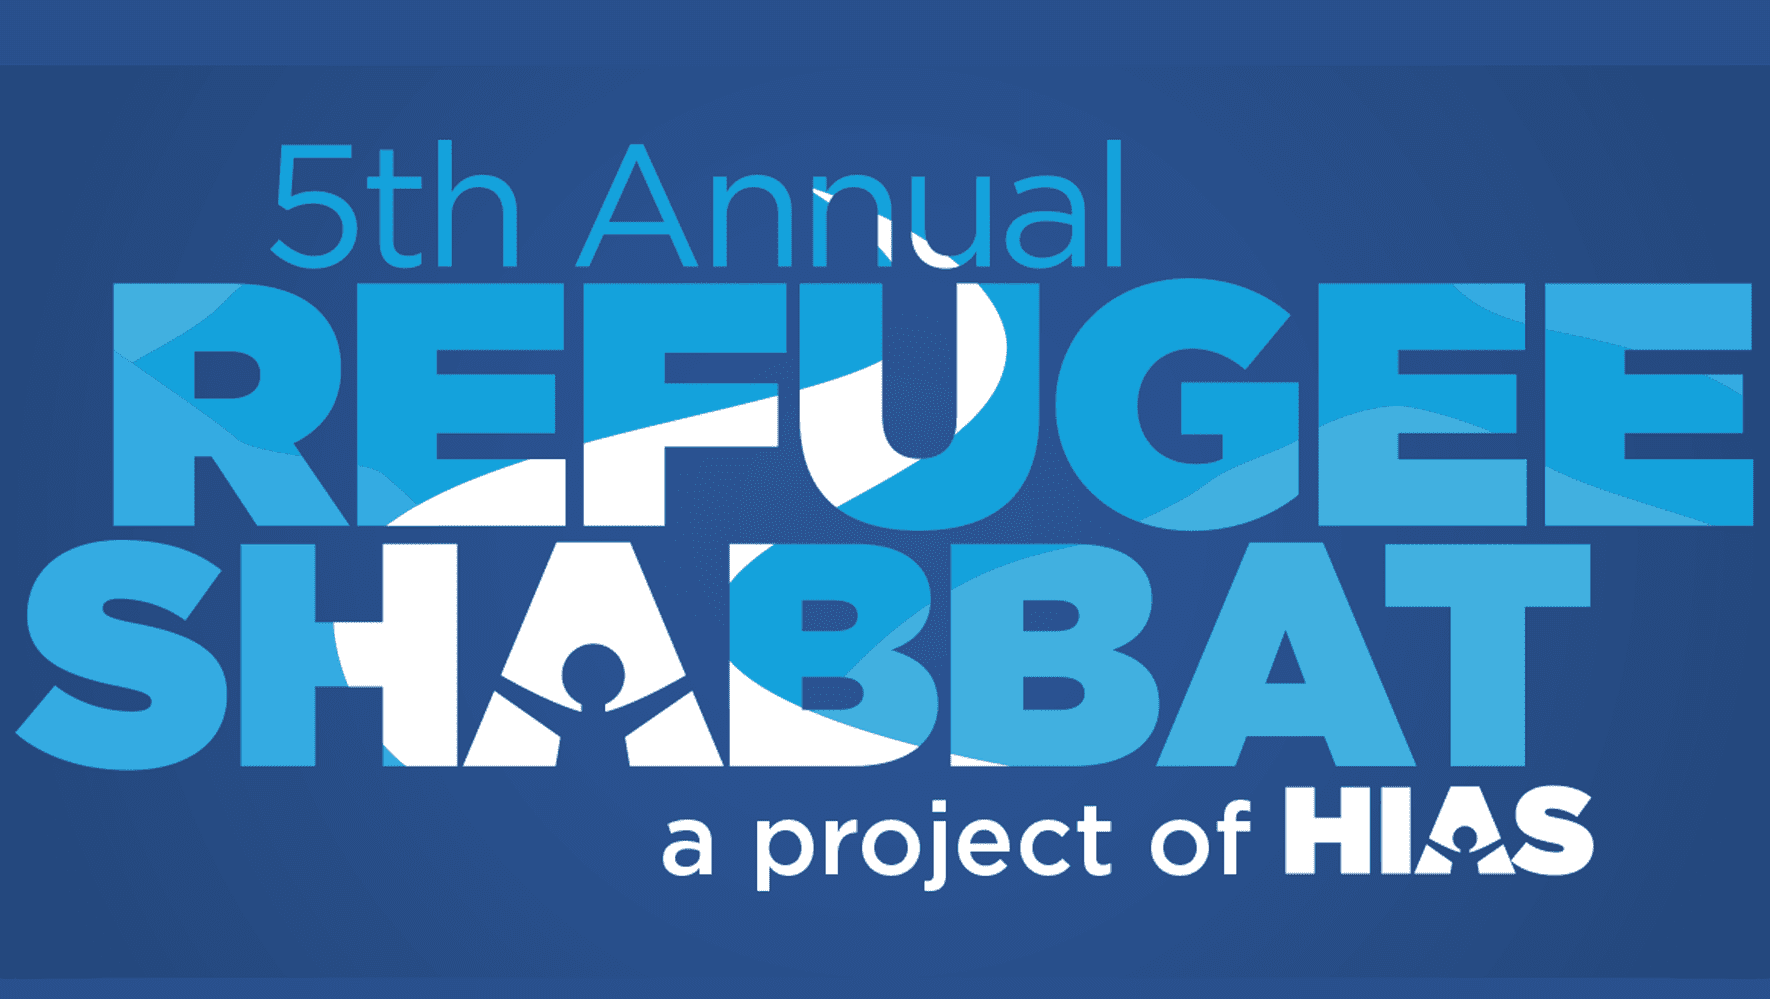 Refugee Shabbat 2023